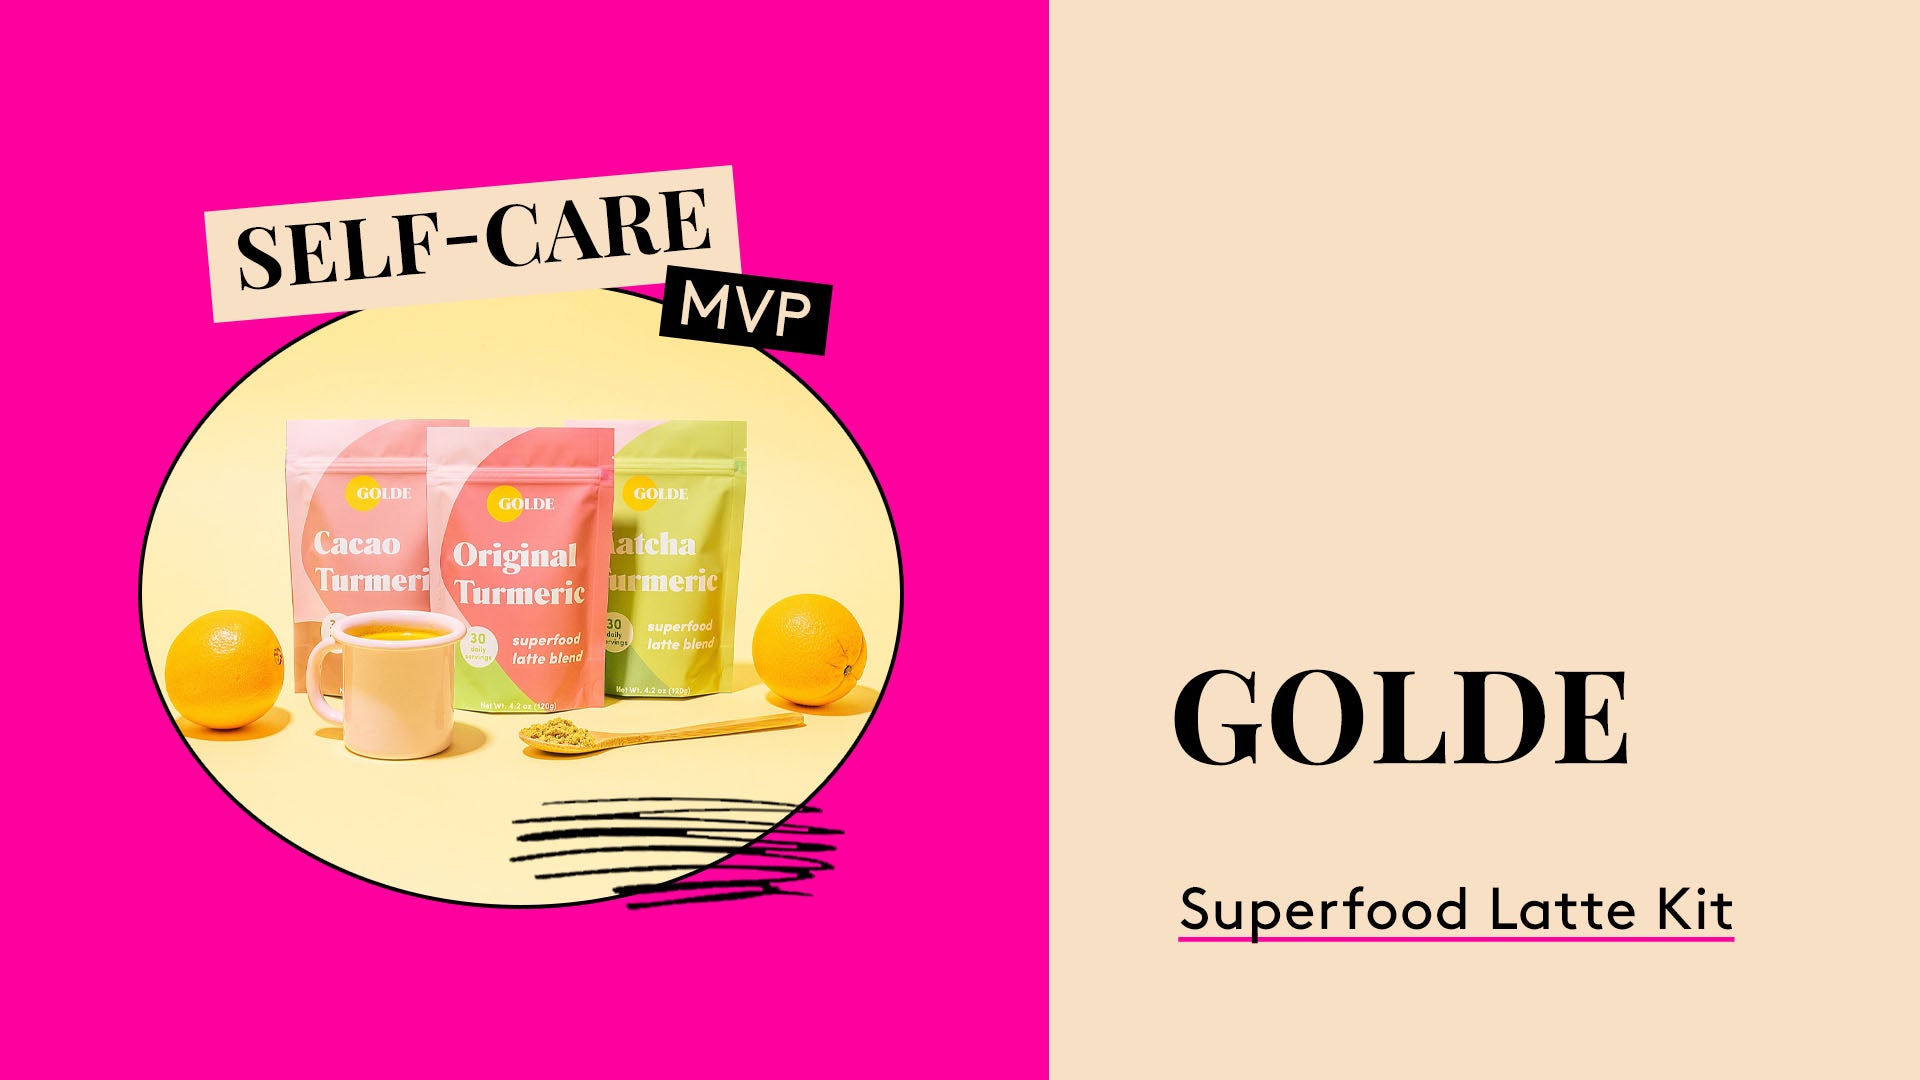 Self-Care MVP. GOLDE Superfood Latte Kit.